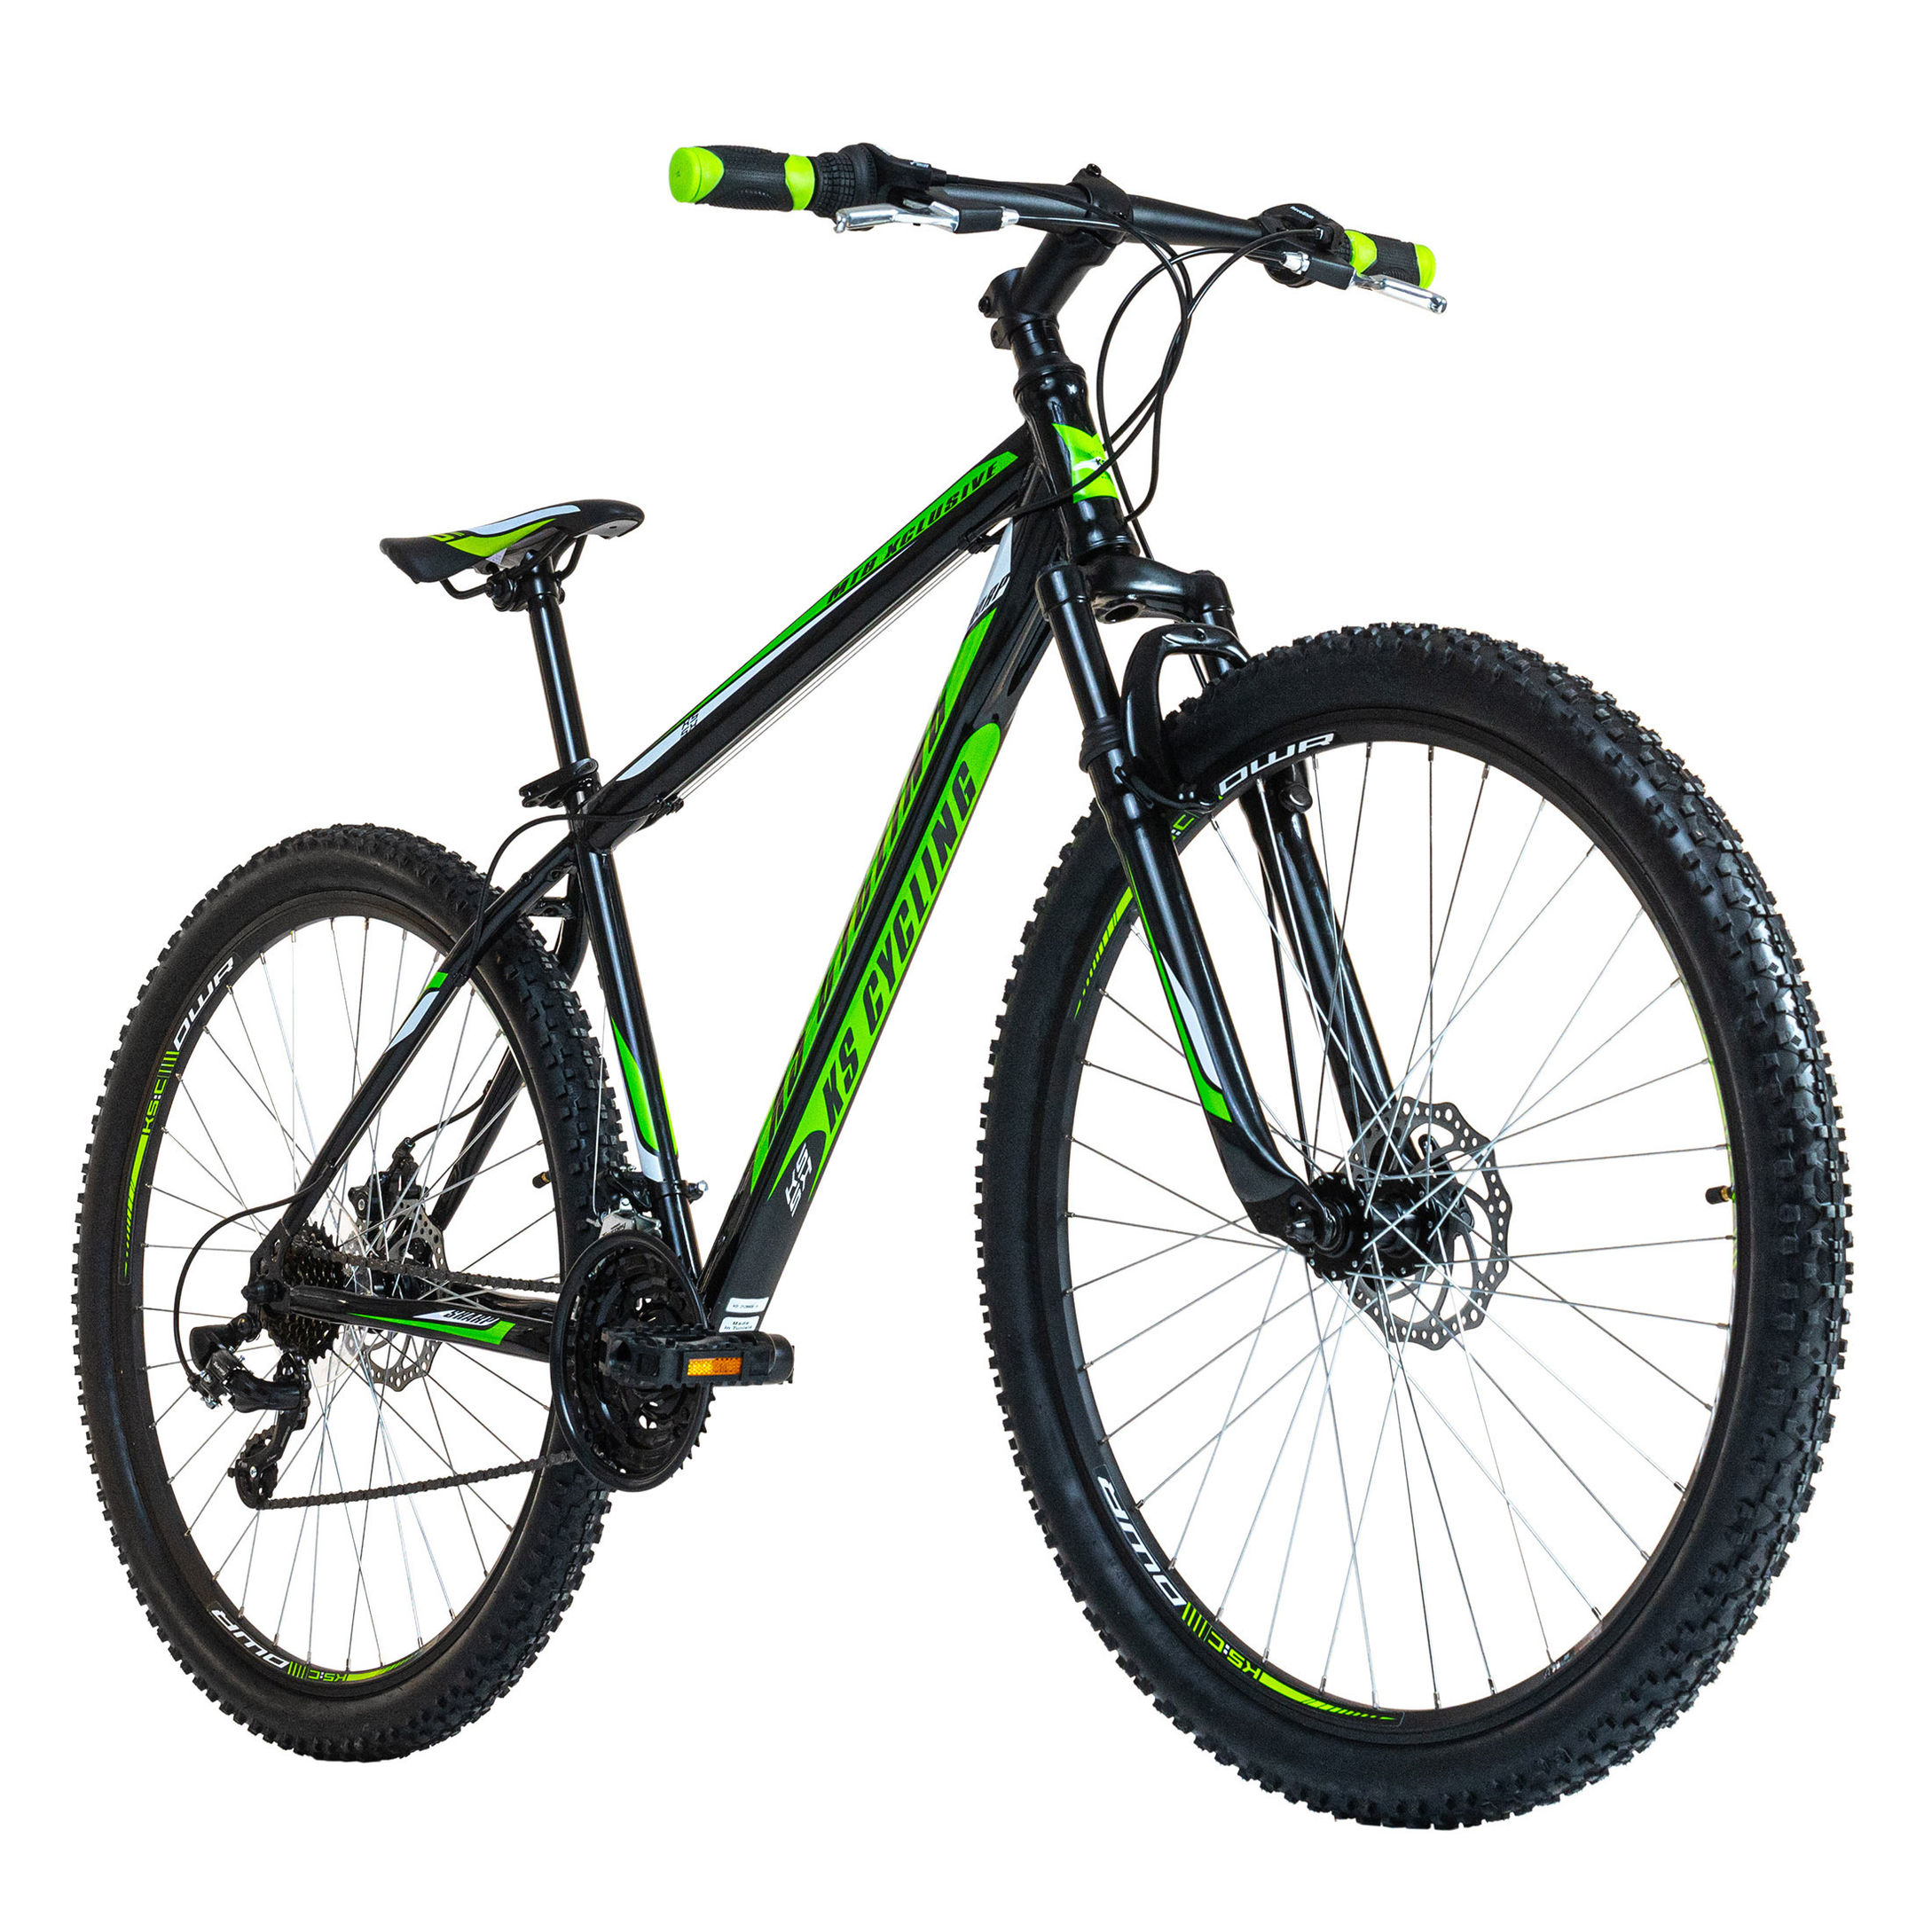 KS Cycling Mountainbike 29 Zoll Sharp schwarz-grün Größe: 46 cm |  Weltbild.de